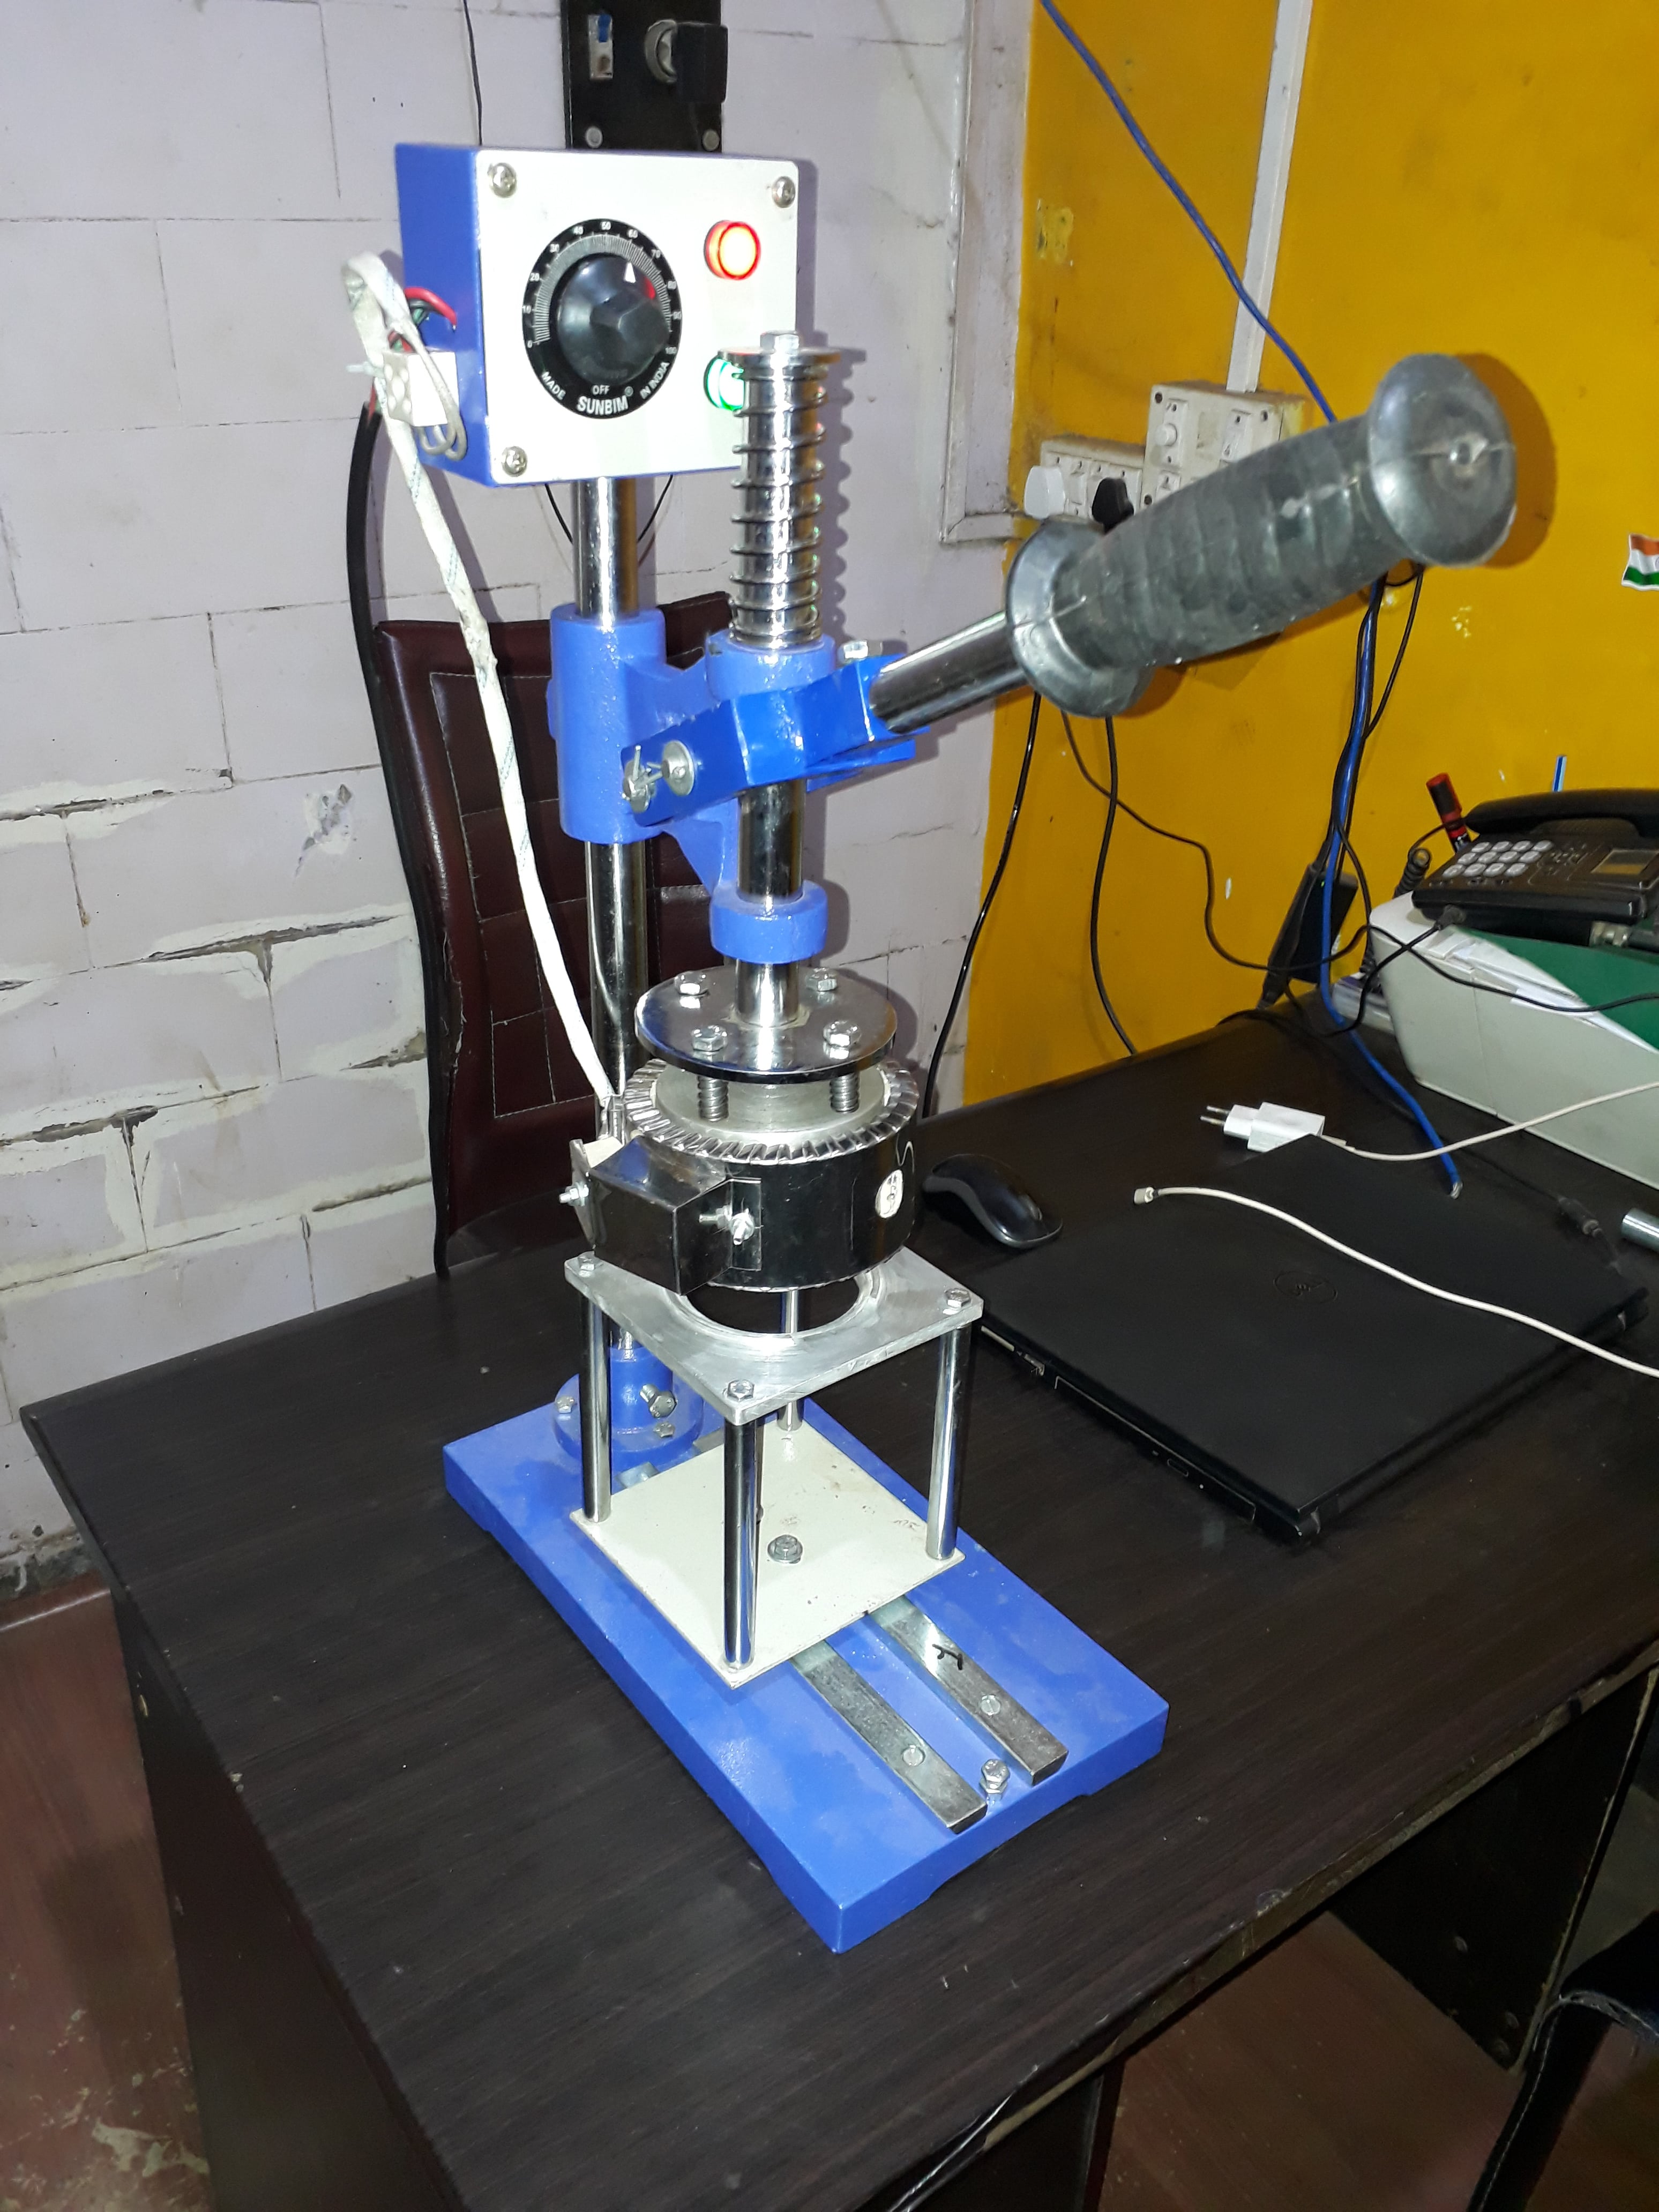 Manual Foil Sealing Machine Manufacturers, Suppliers, Exporters in Mumbai India